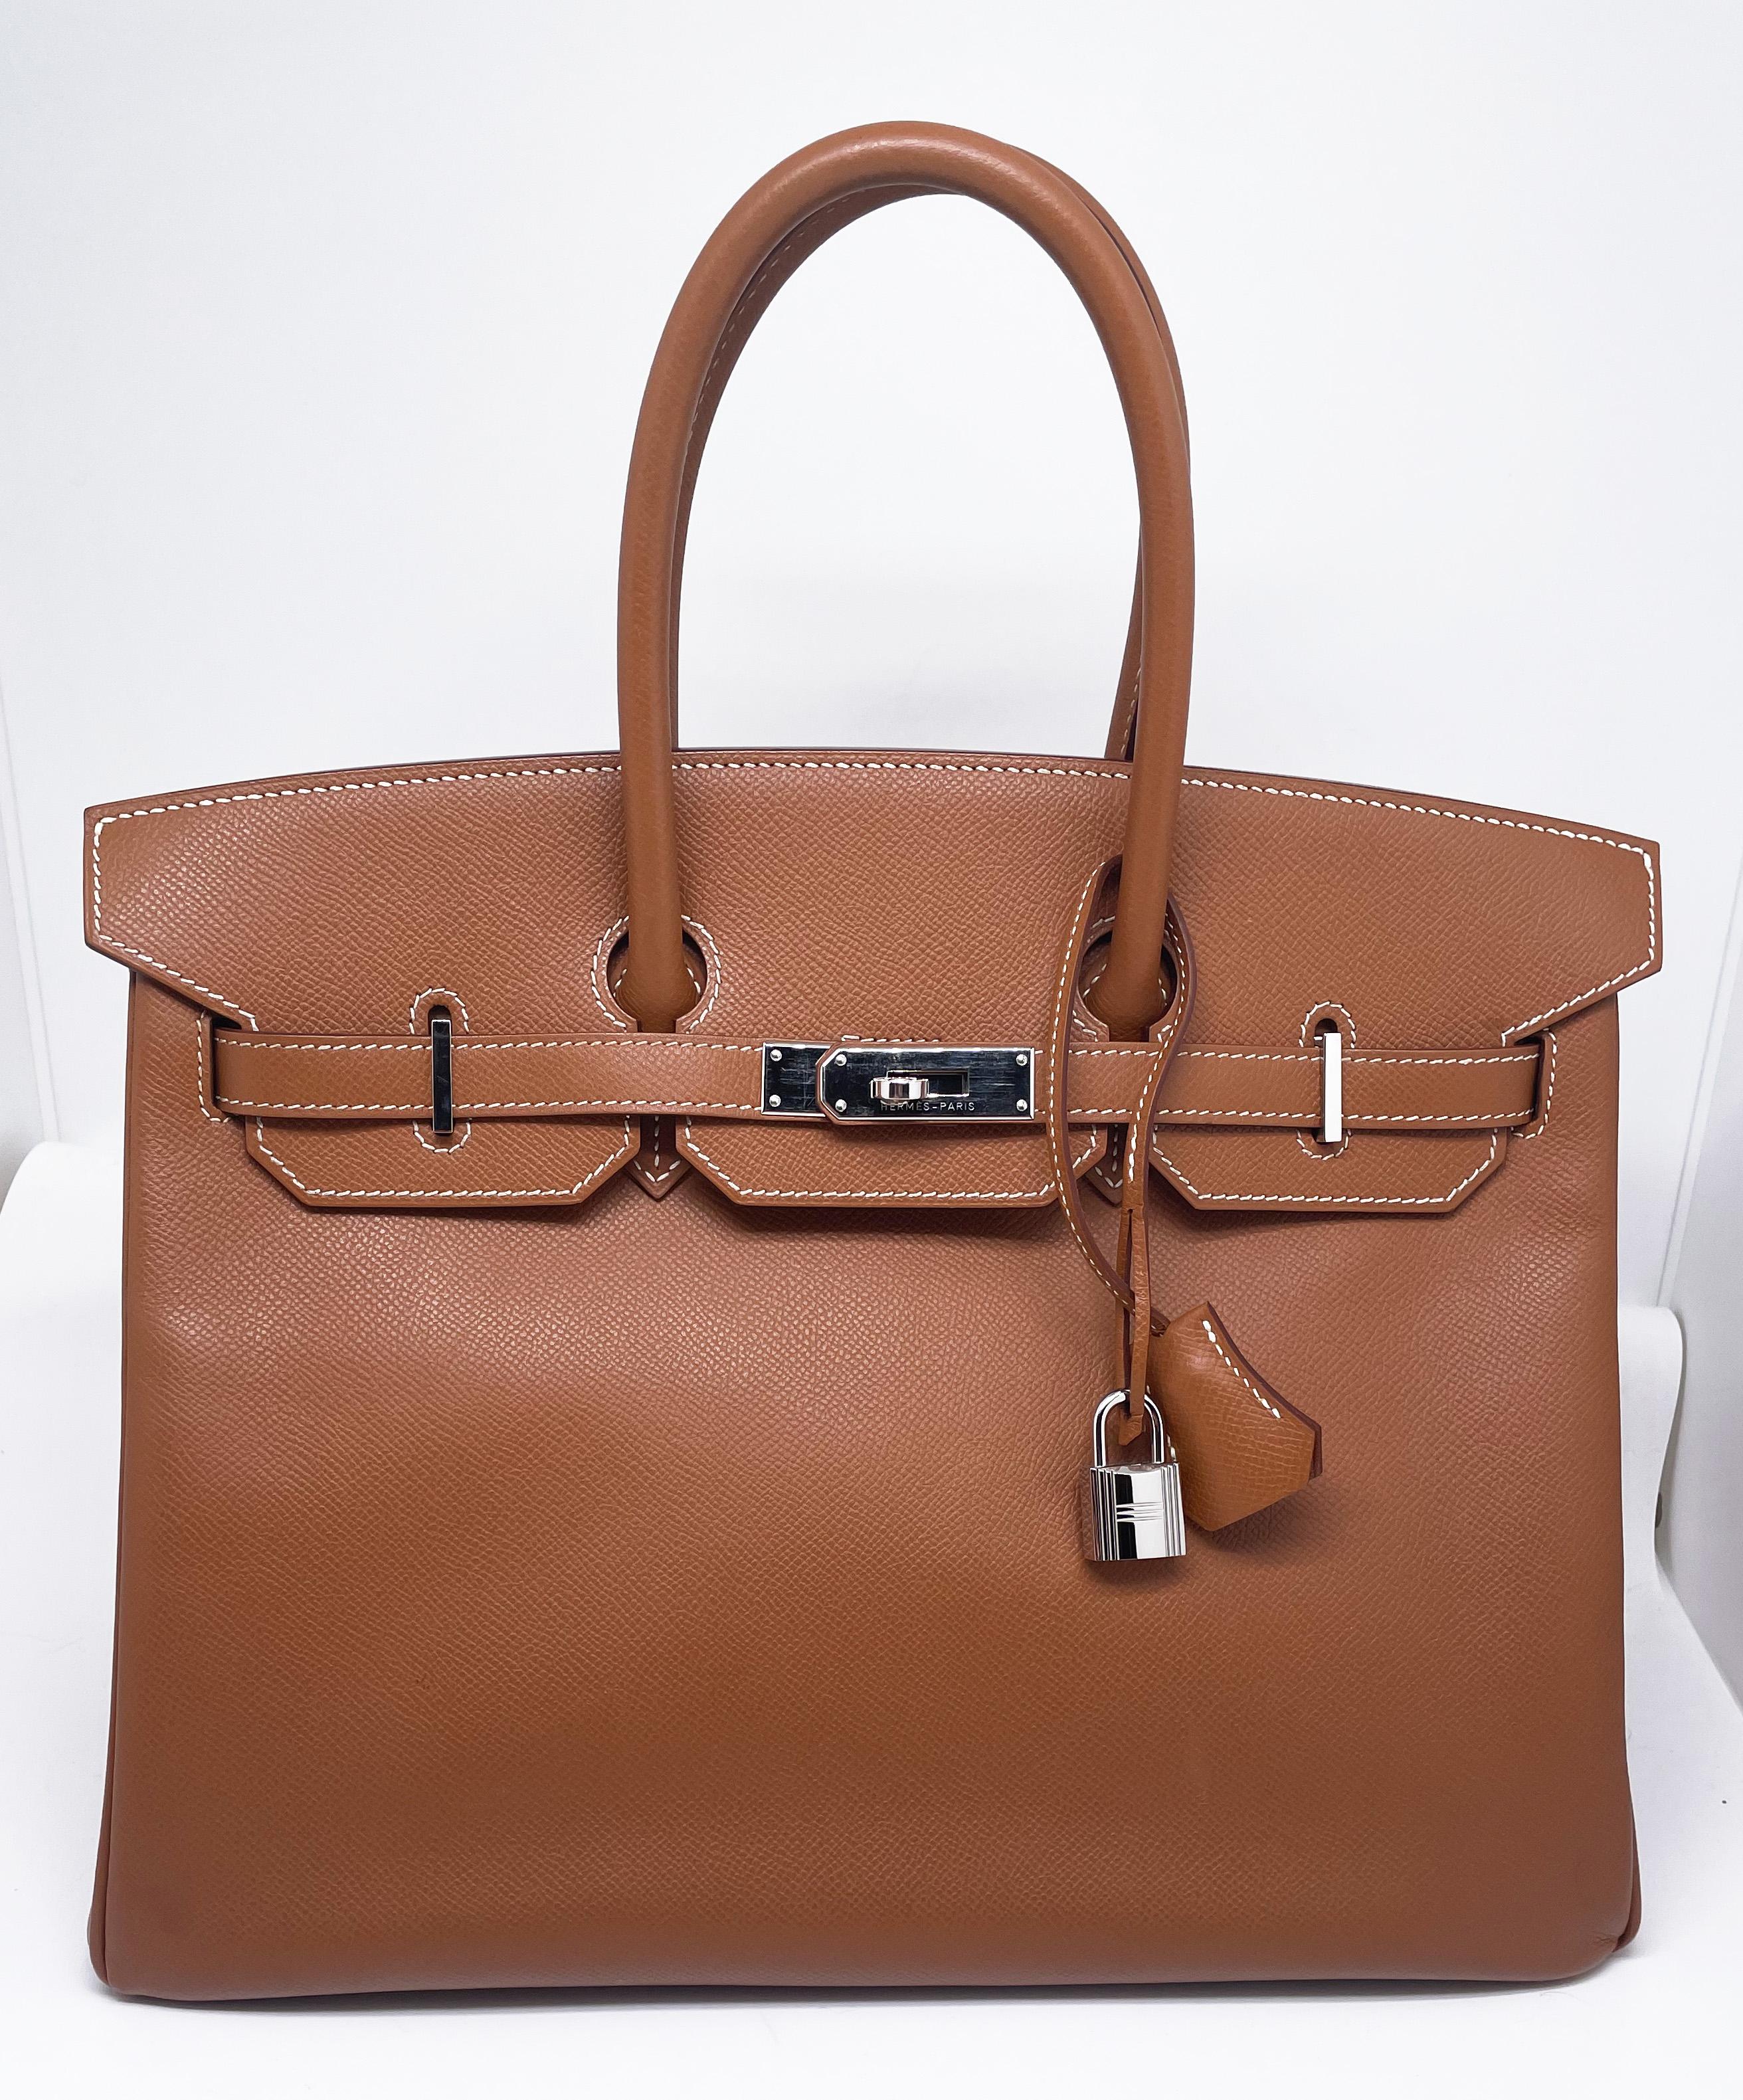 Hermès Birkin 35 Gold handbag in Espom leather and white stitching 9